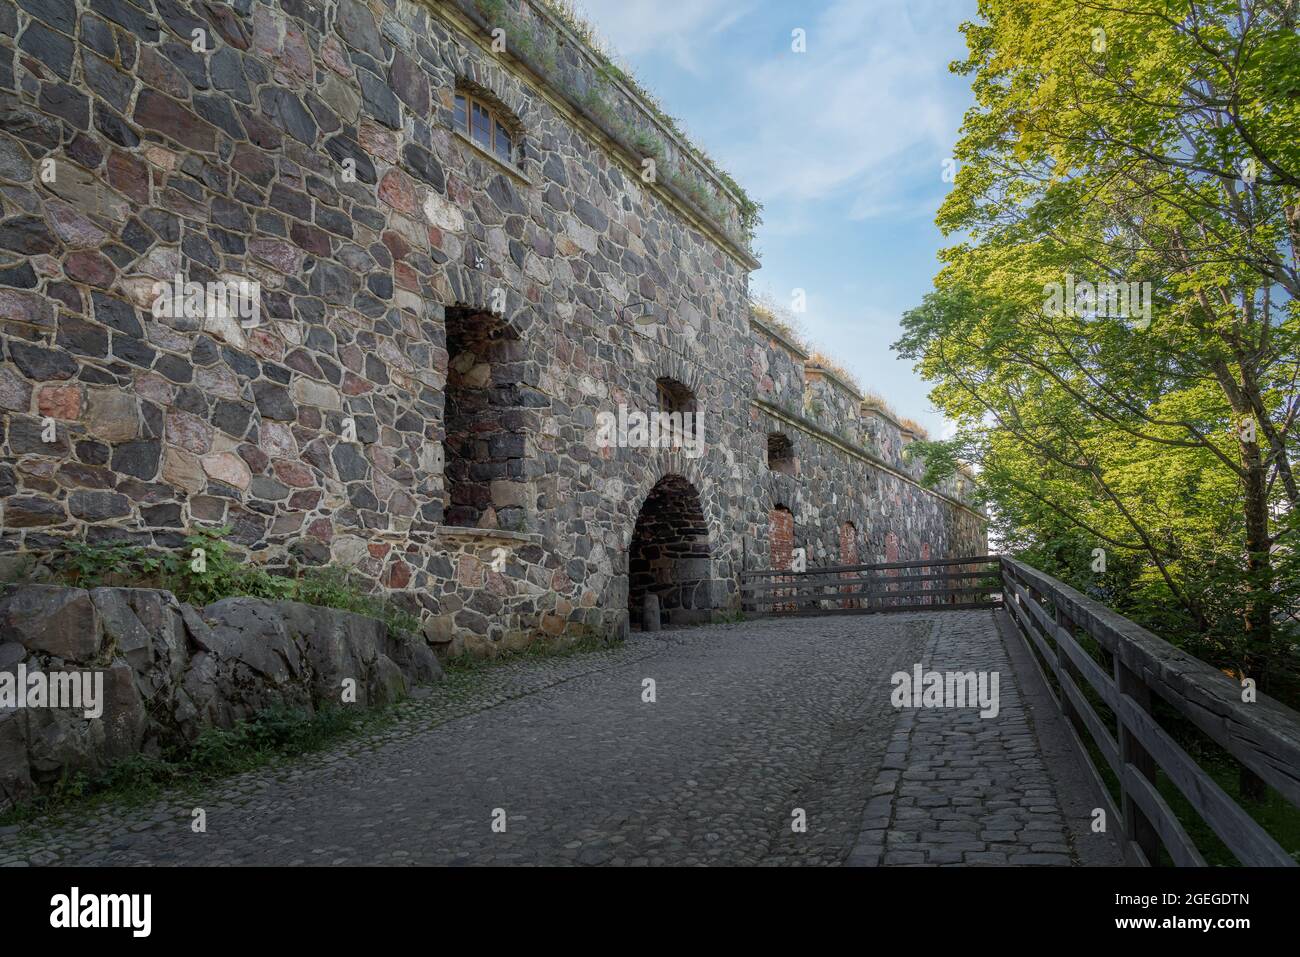 Walls at Fortress of Suomenlinna - Helsinki, Finland Stock Photo